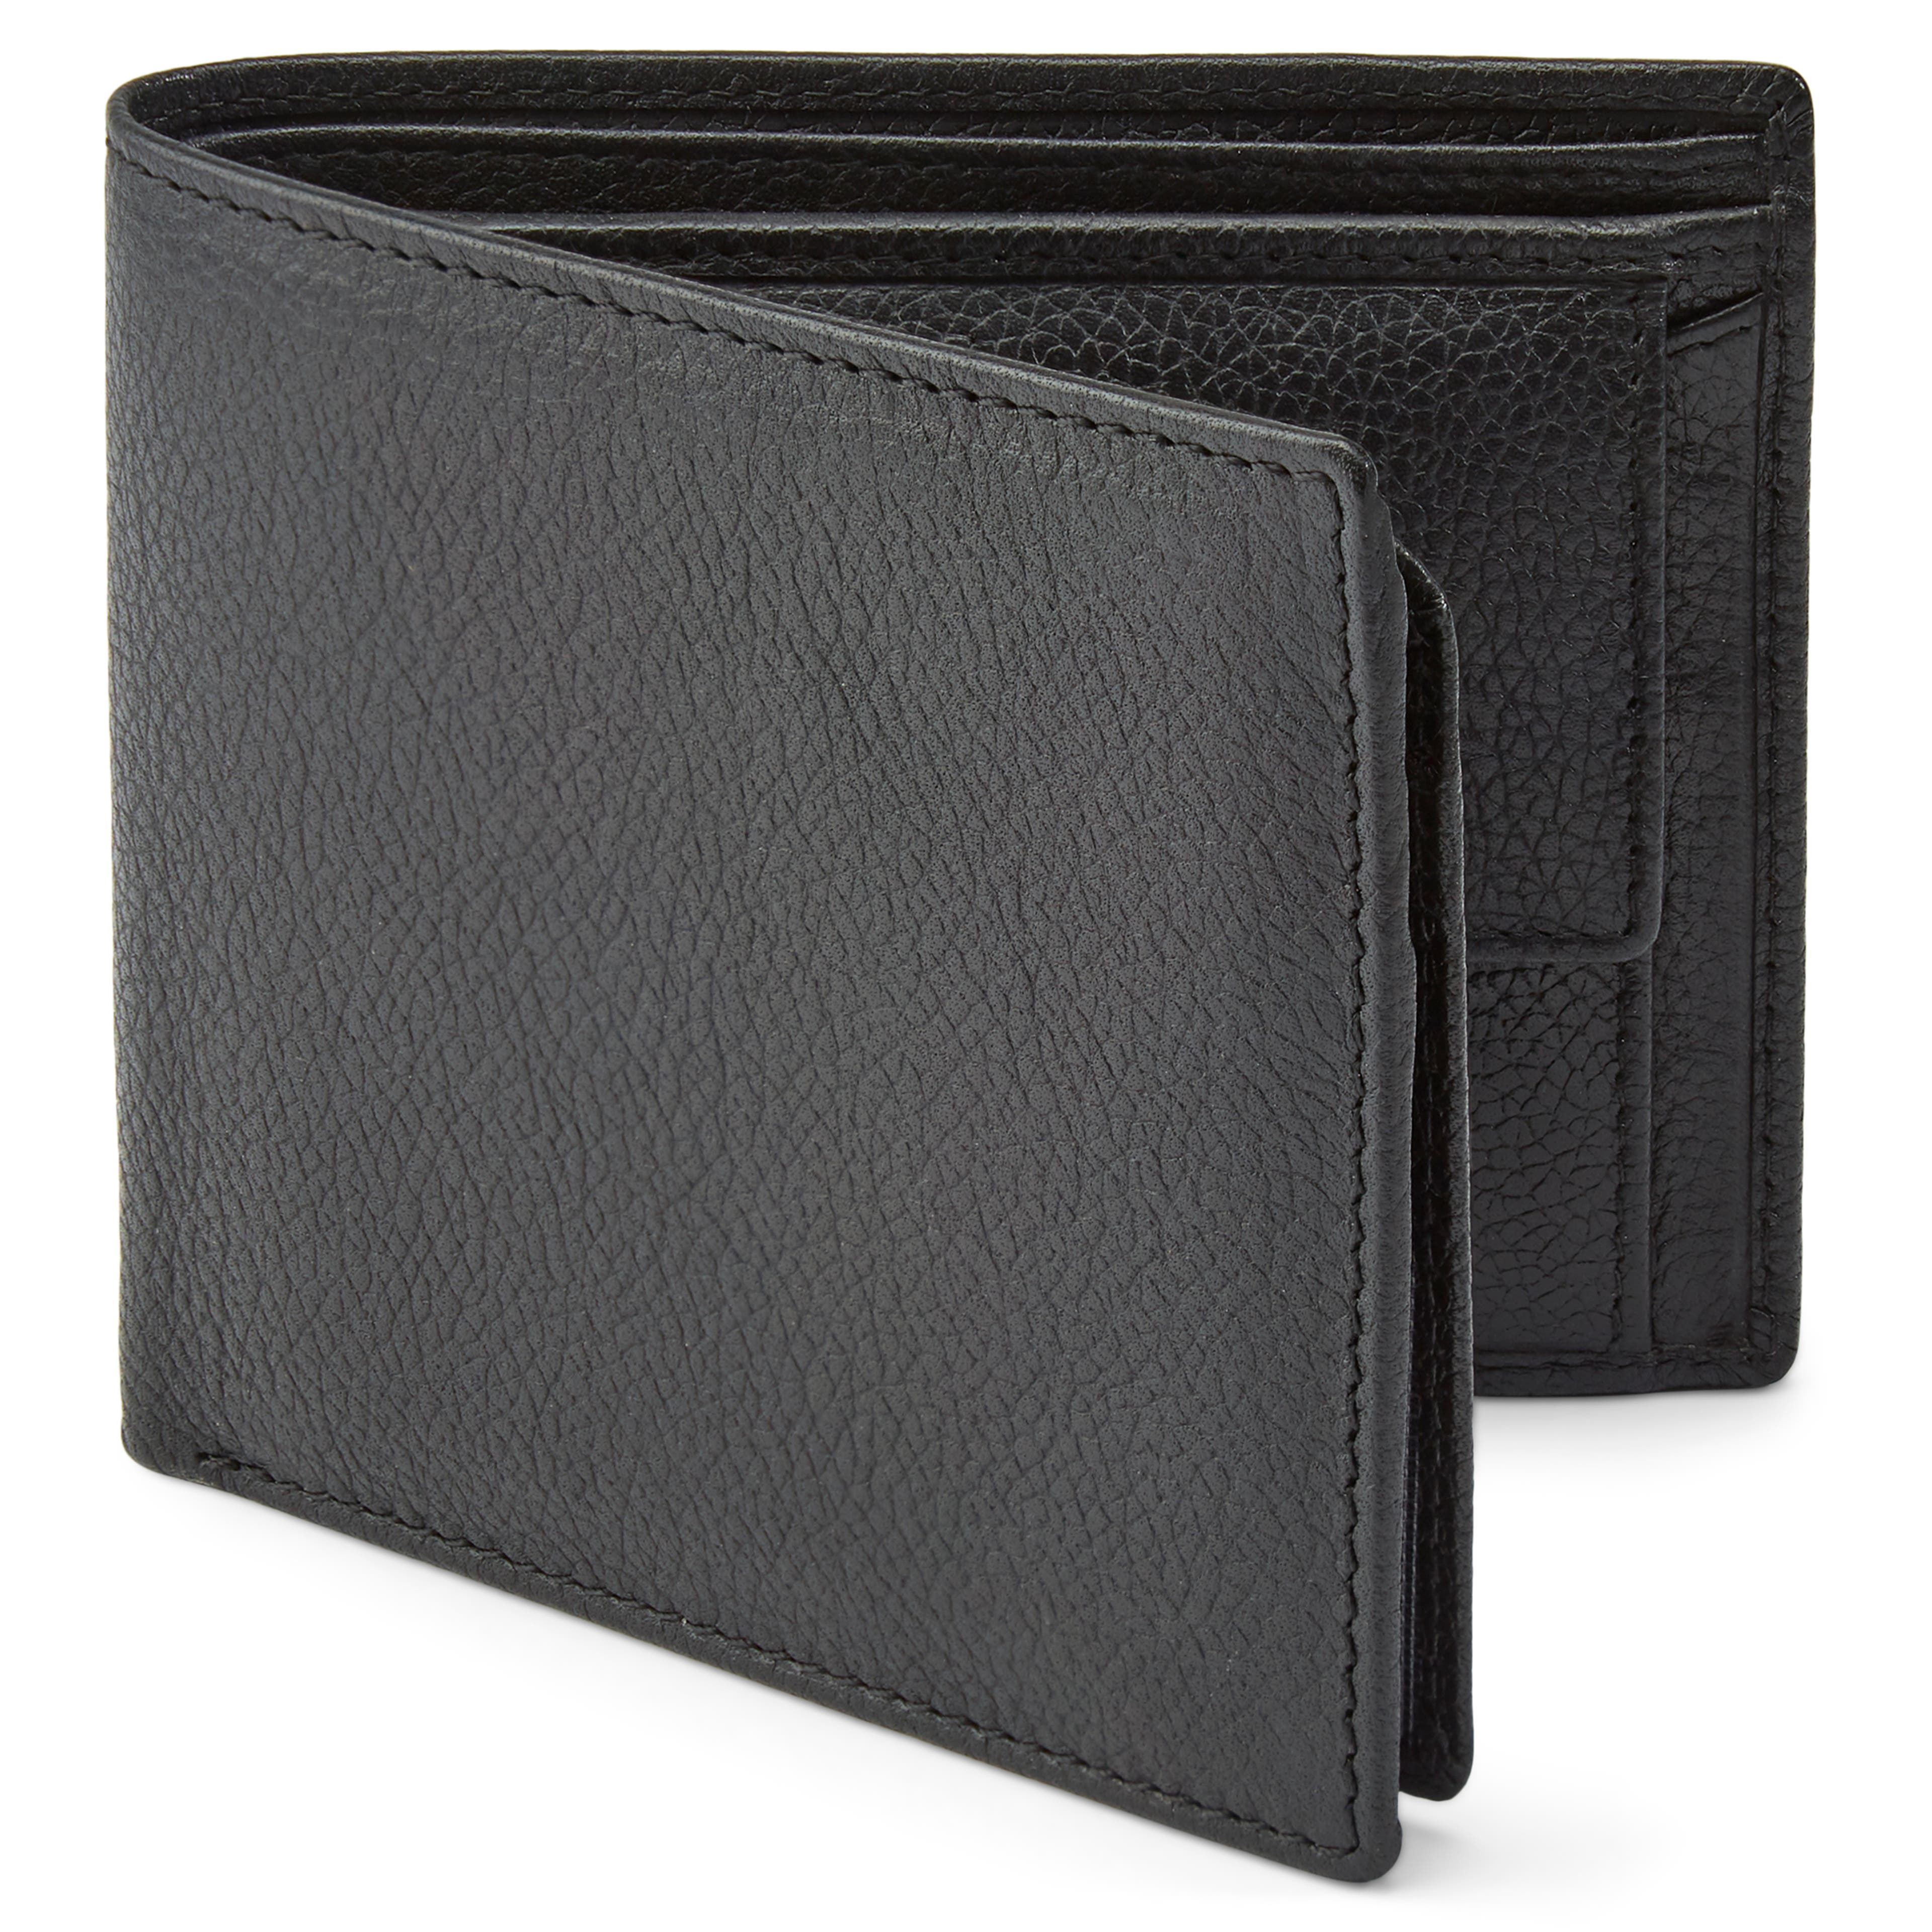 Black Leather RFID-Blocking Wallet